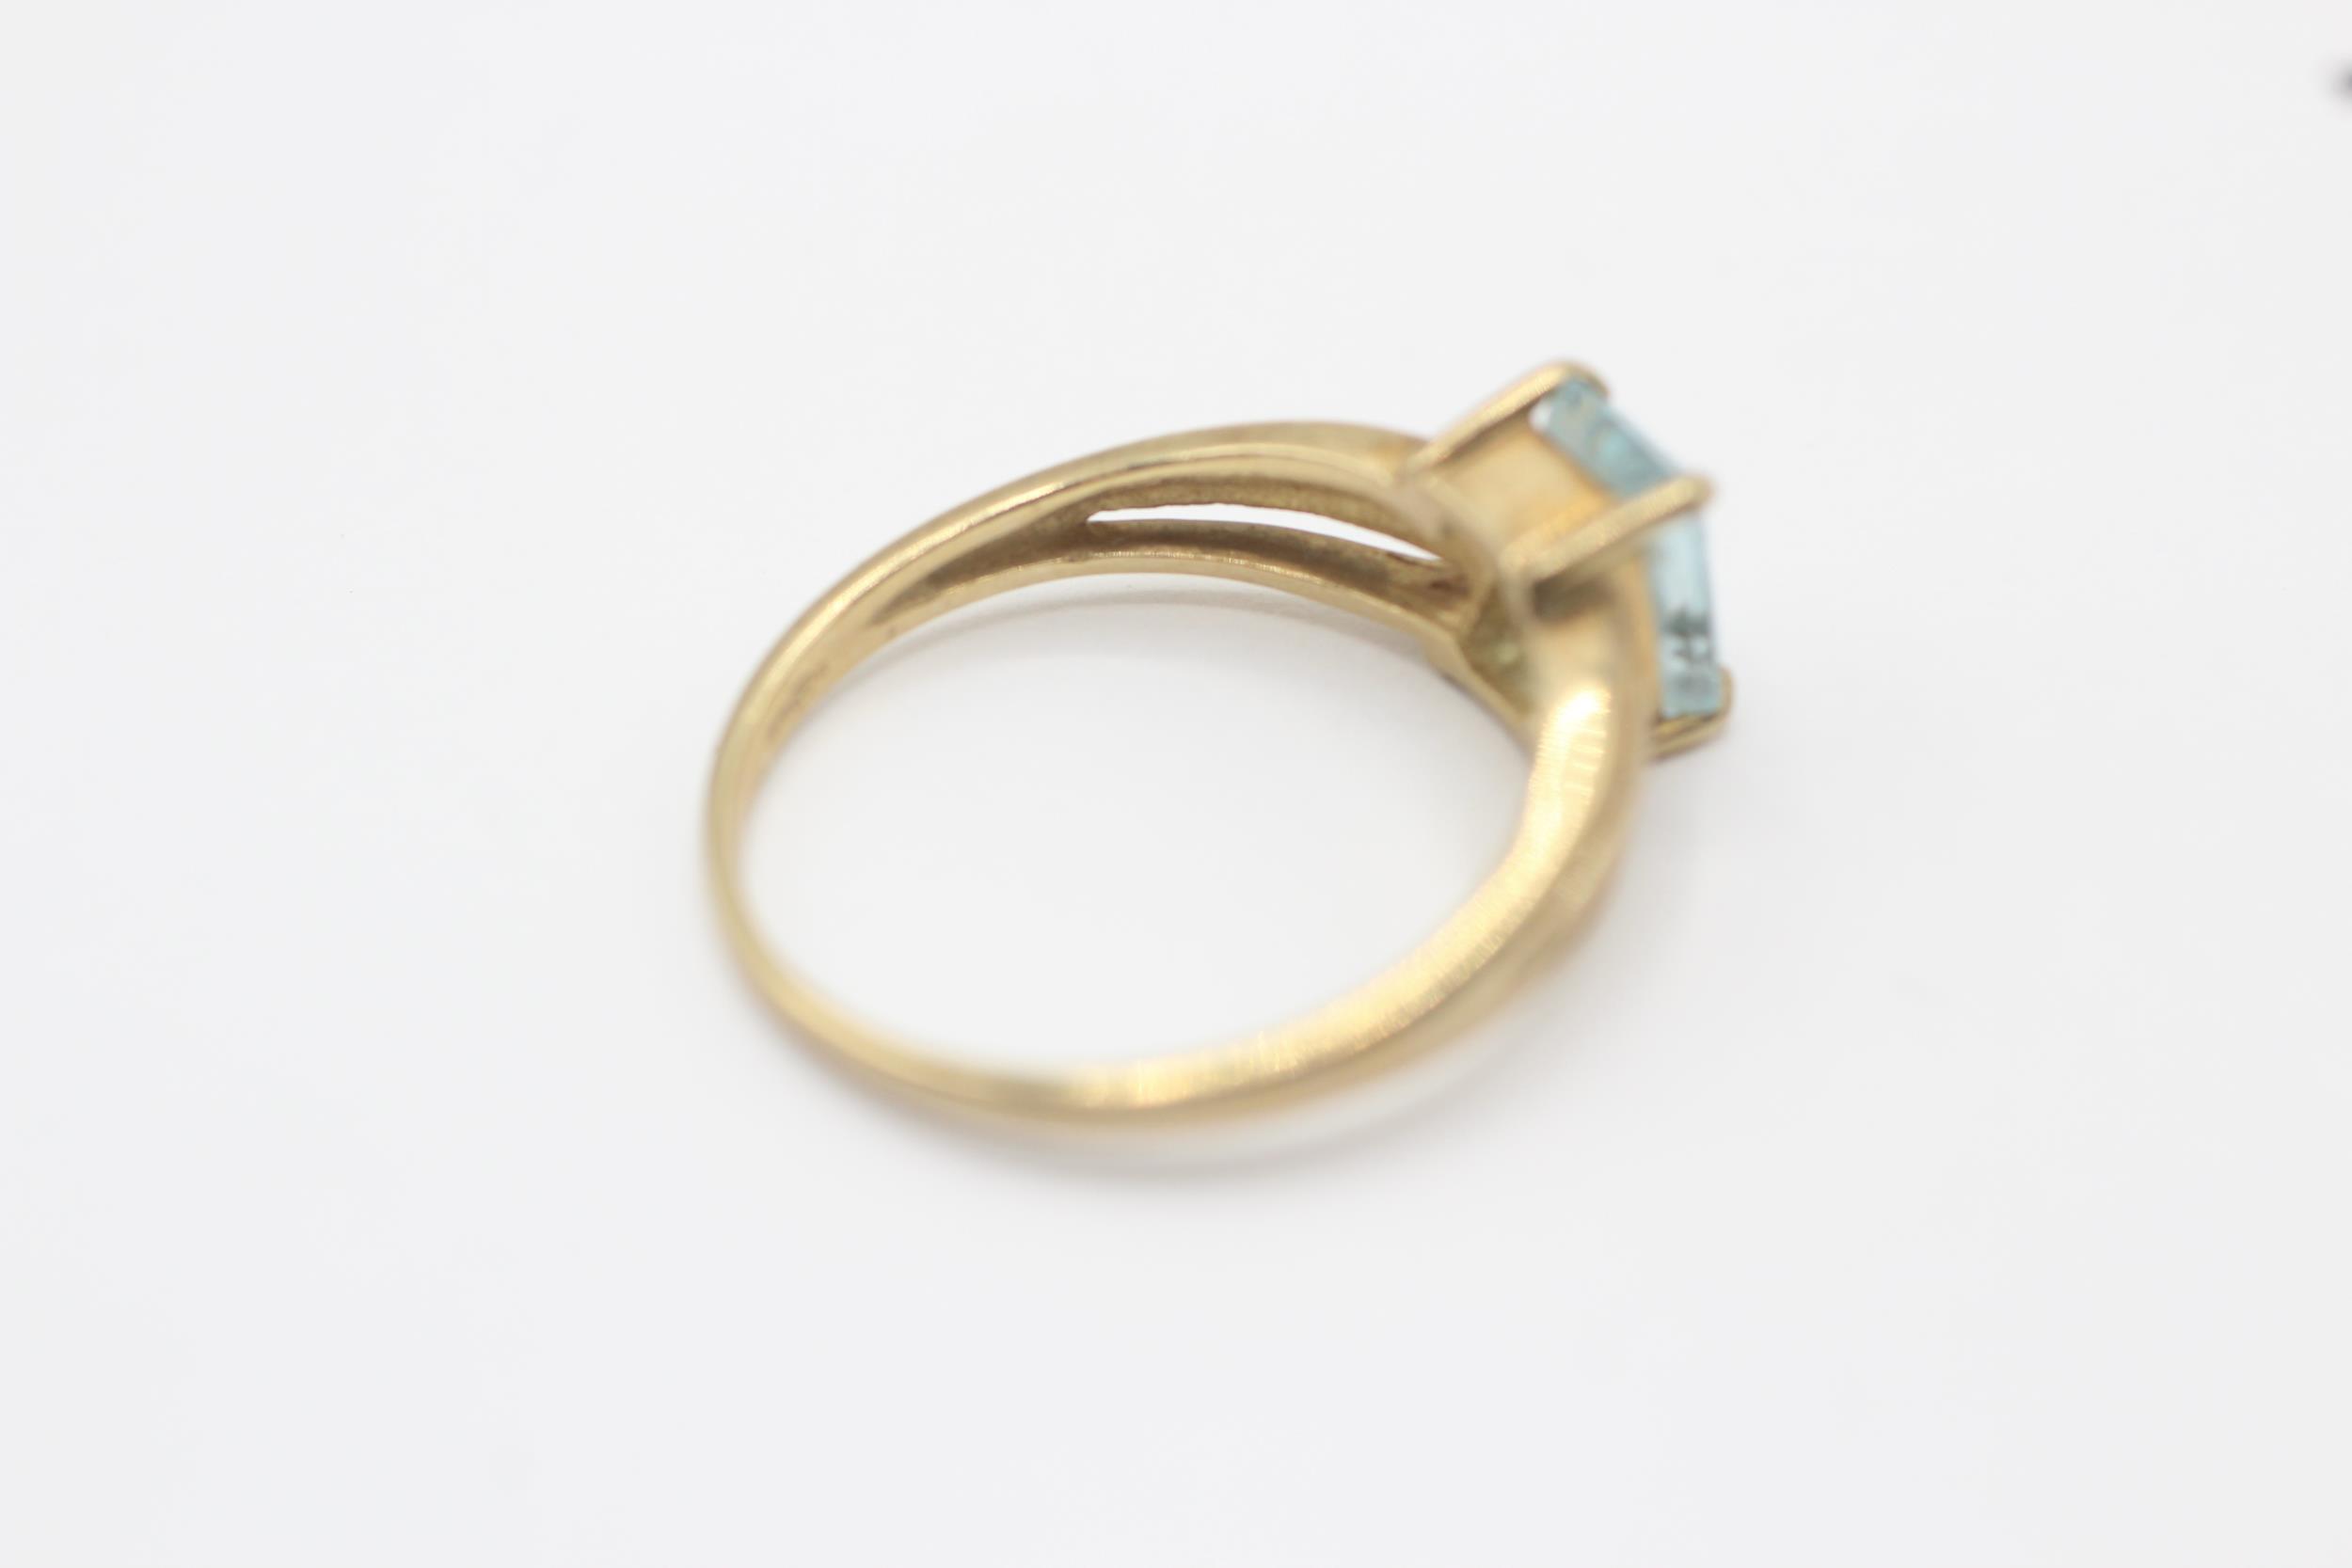 9ct gold rectangle topaz single stone ring Size M 1.8 g - Image 5 of 6